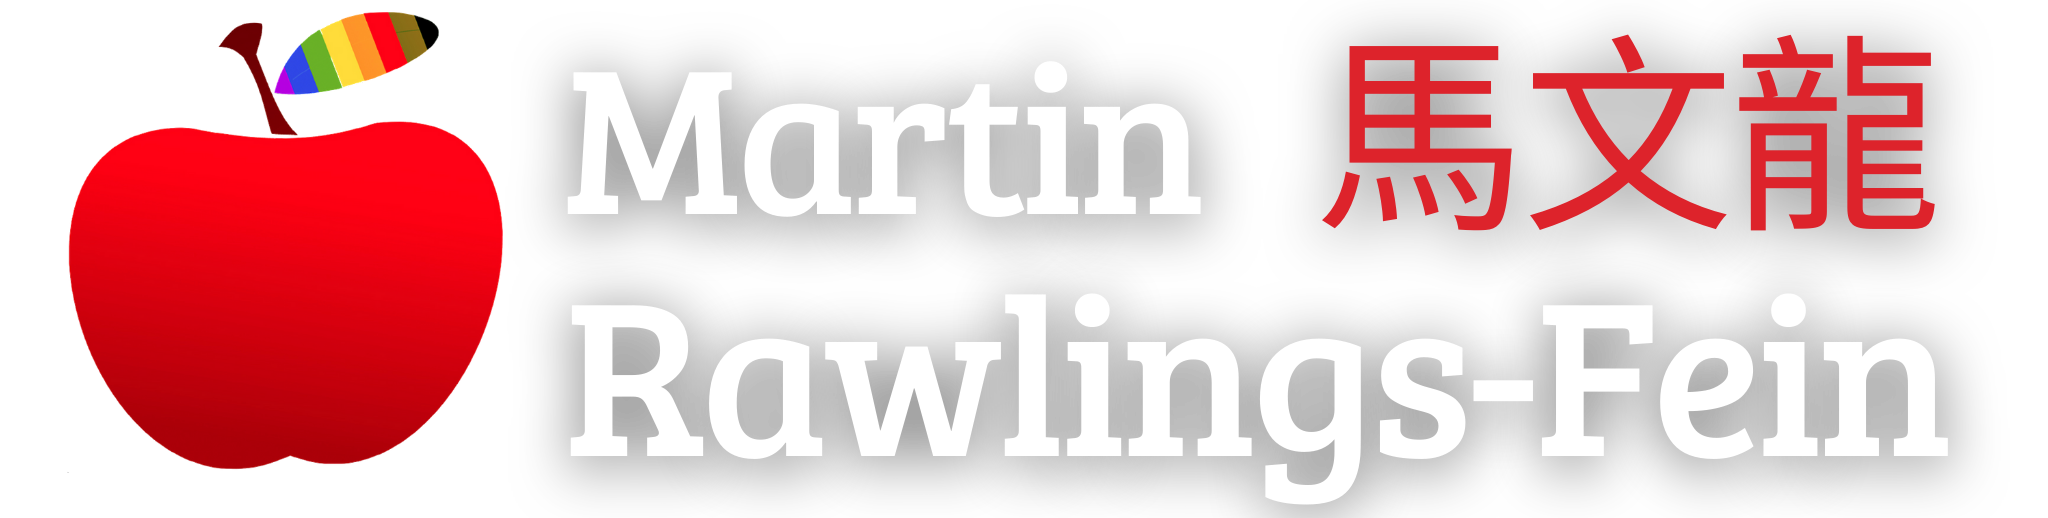 Martin Rawlings-Fein